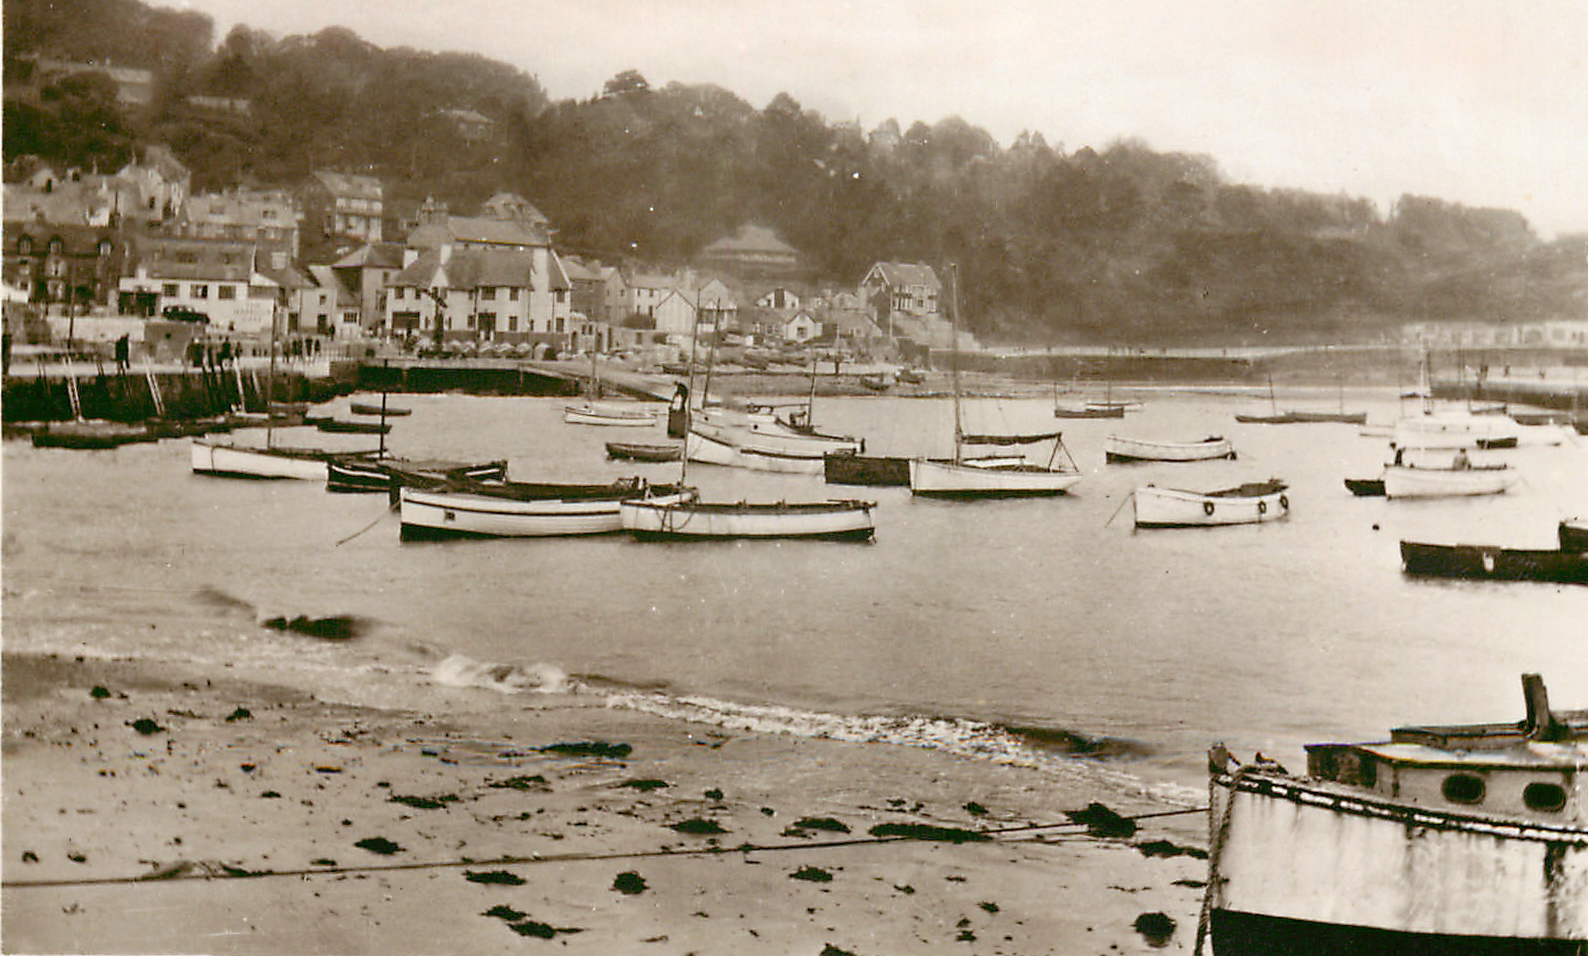 The harbour, Lyme Regis circa 1950s